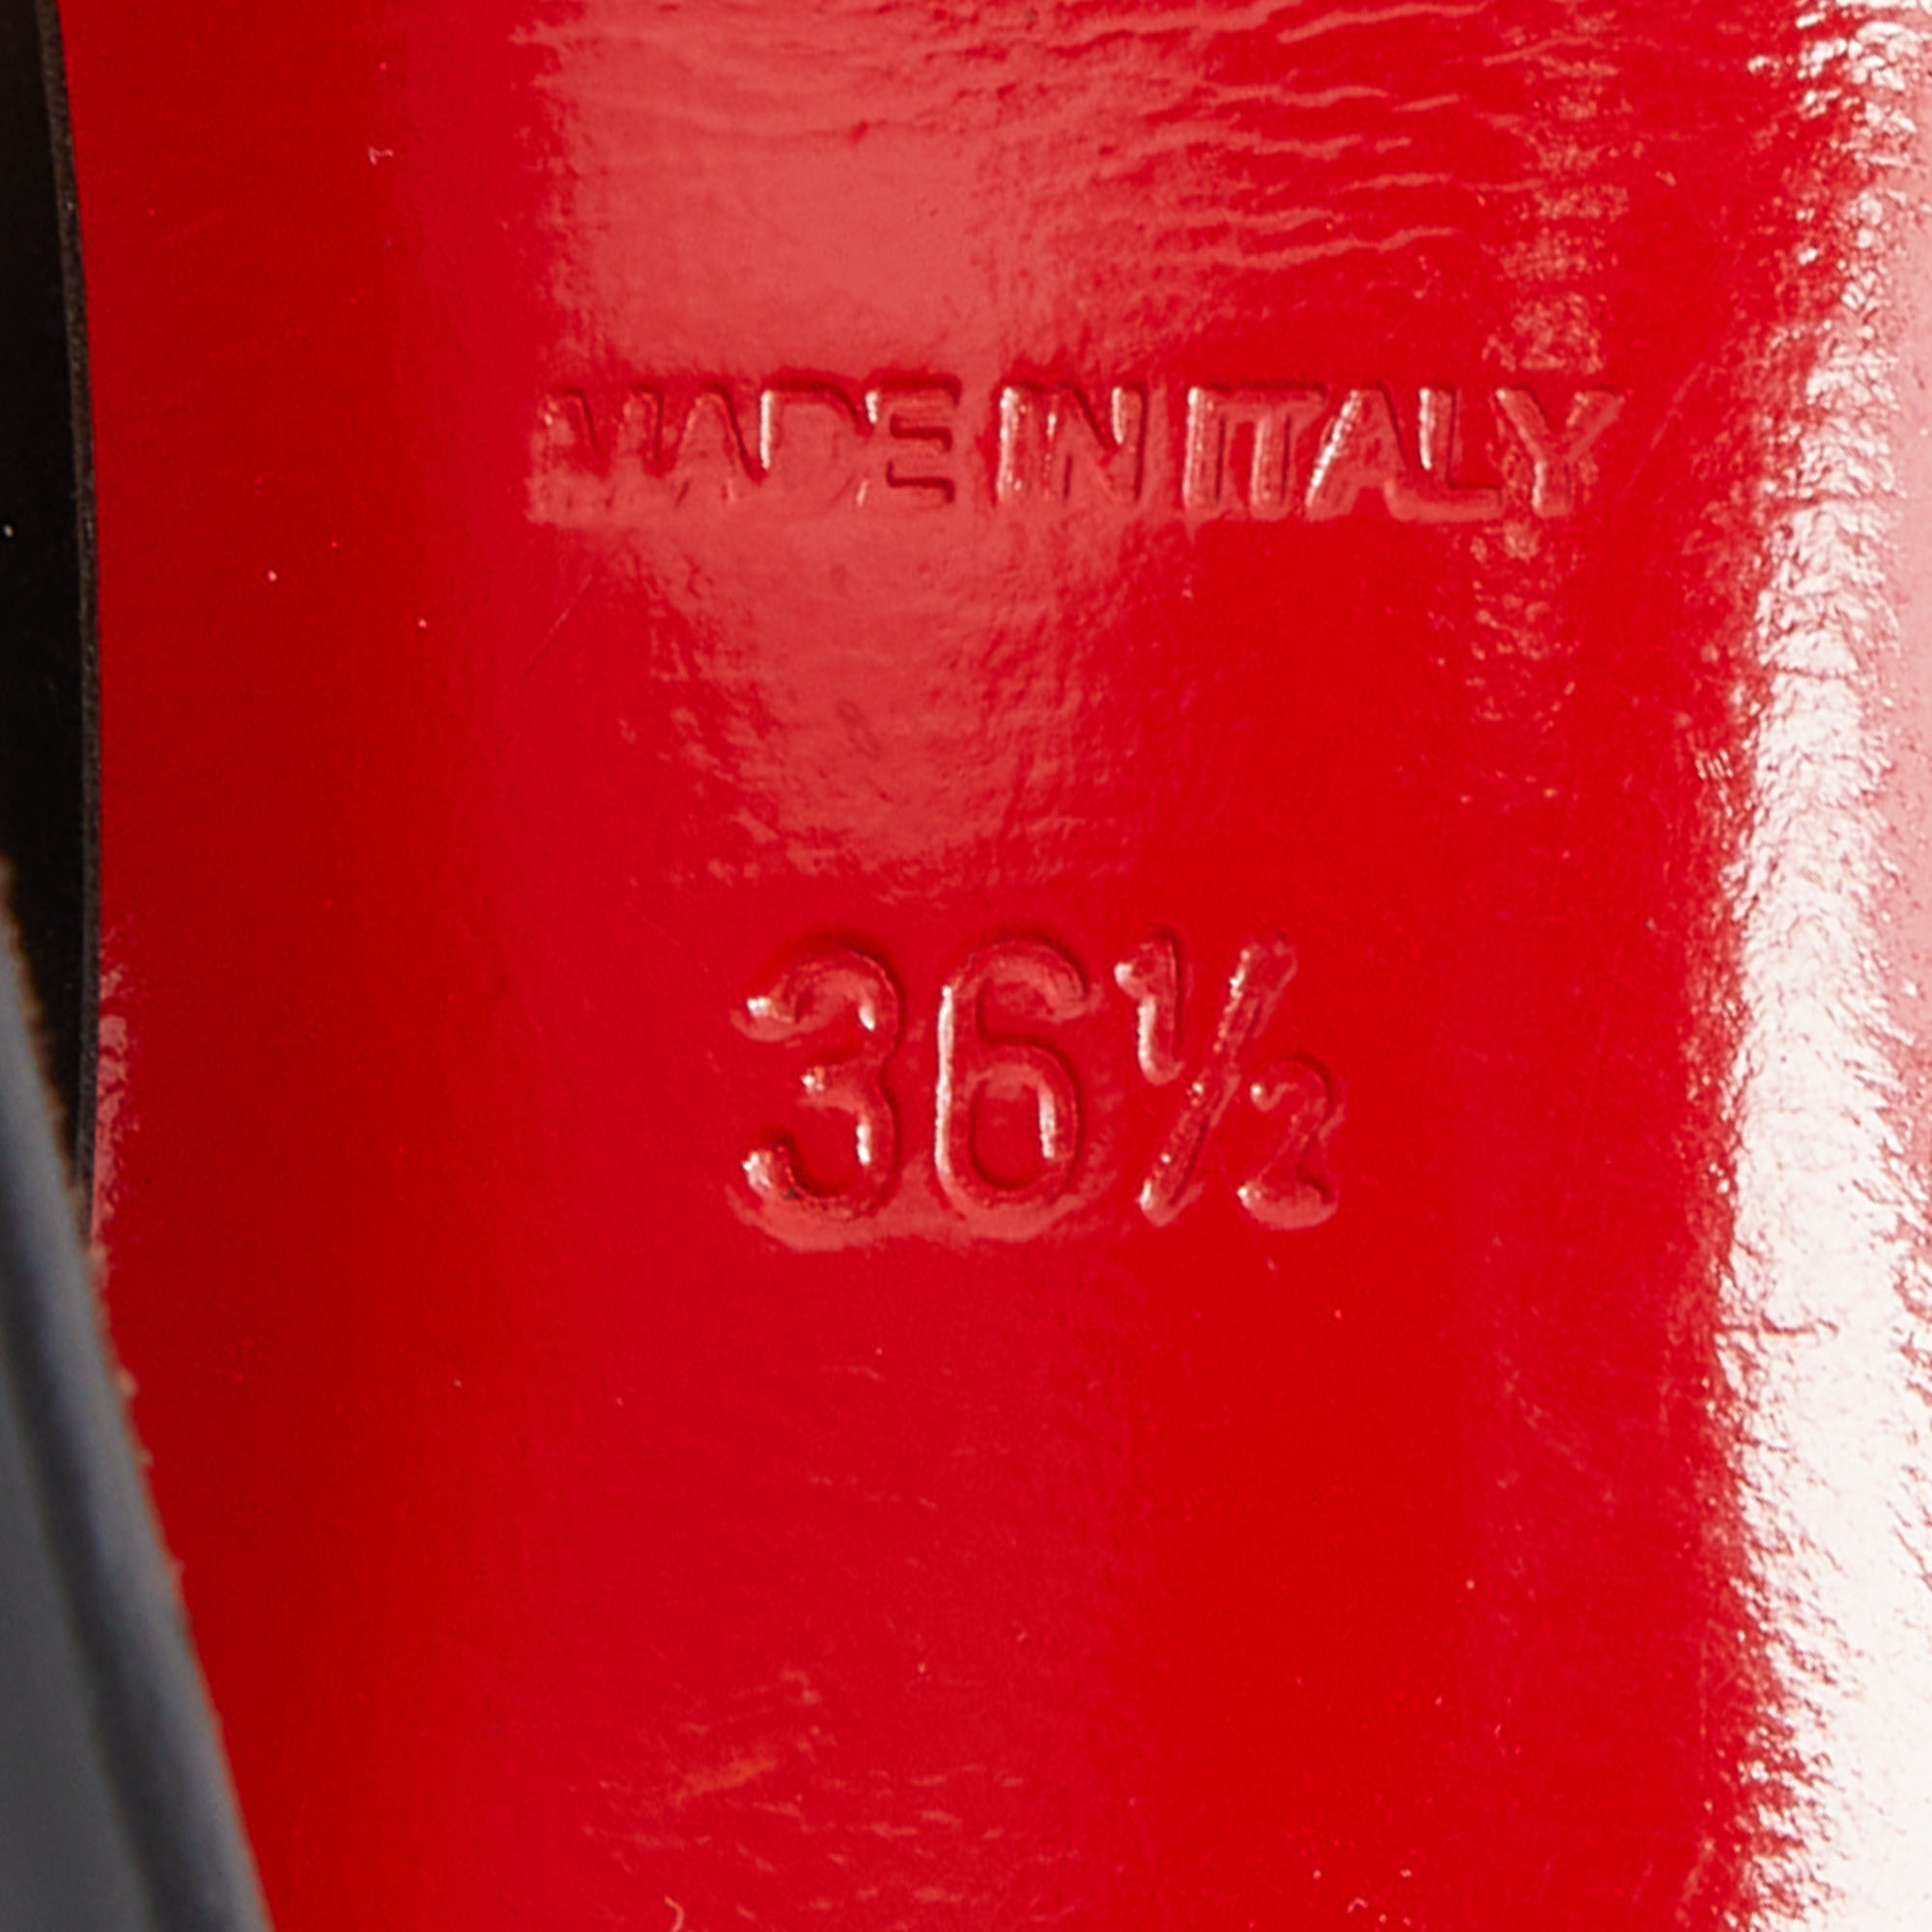 Christian Louboutin Black Patent Leather Lady Peep Pumps Size 36.5